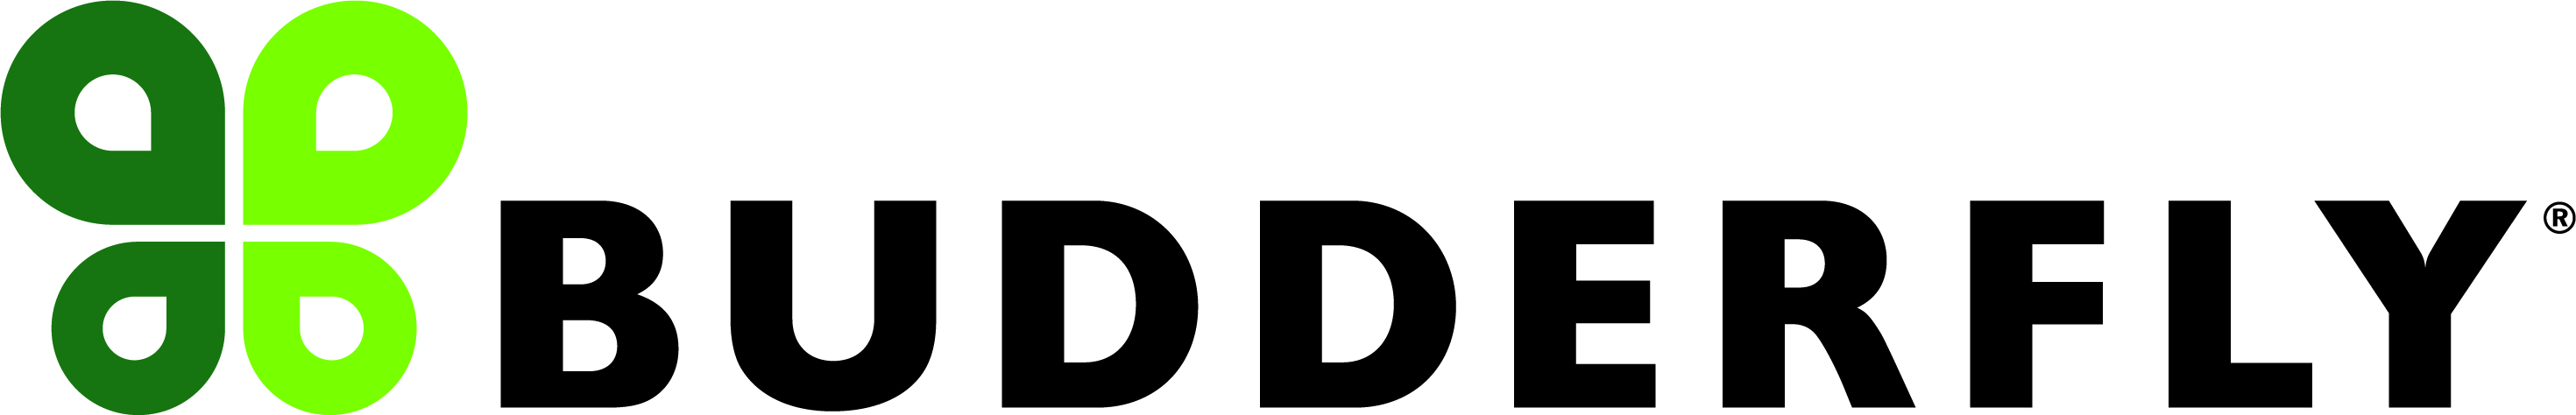 budderfly logo color.jpg